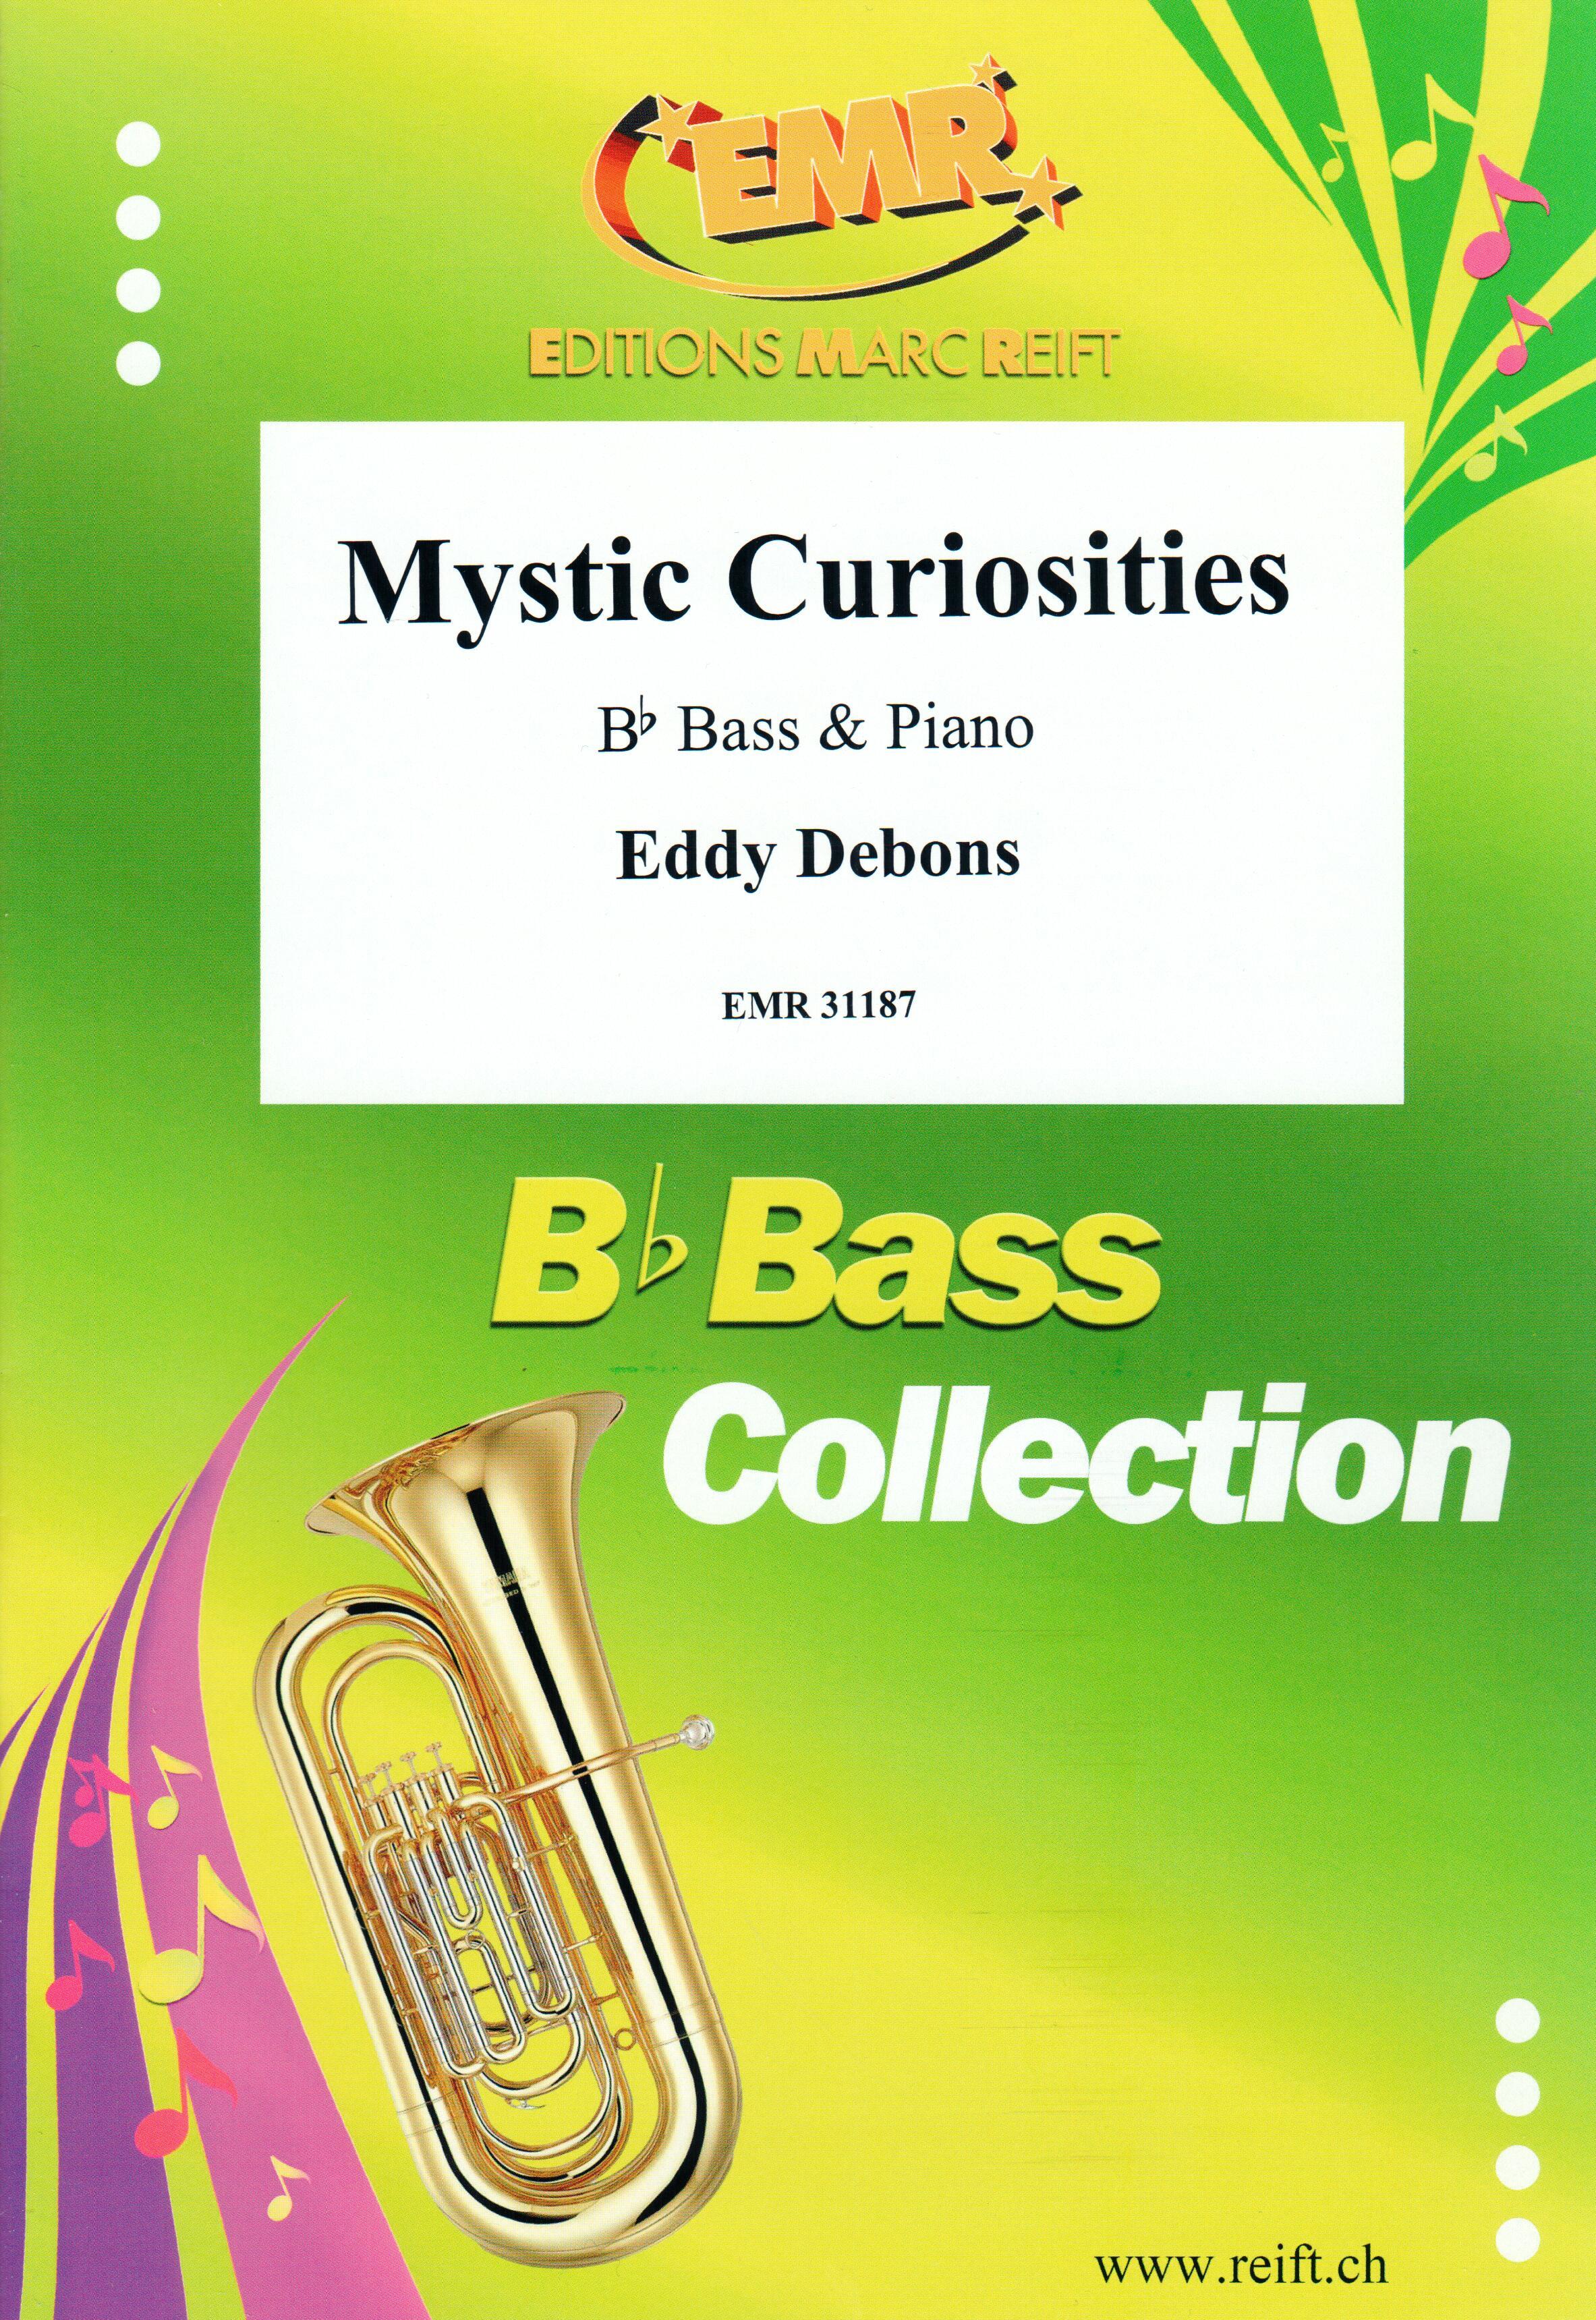 MYSTIC CURIOSITIES, SOLOS - E♭. Bass